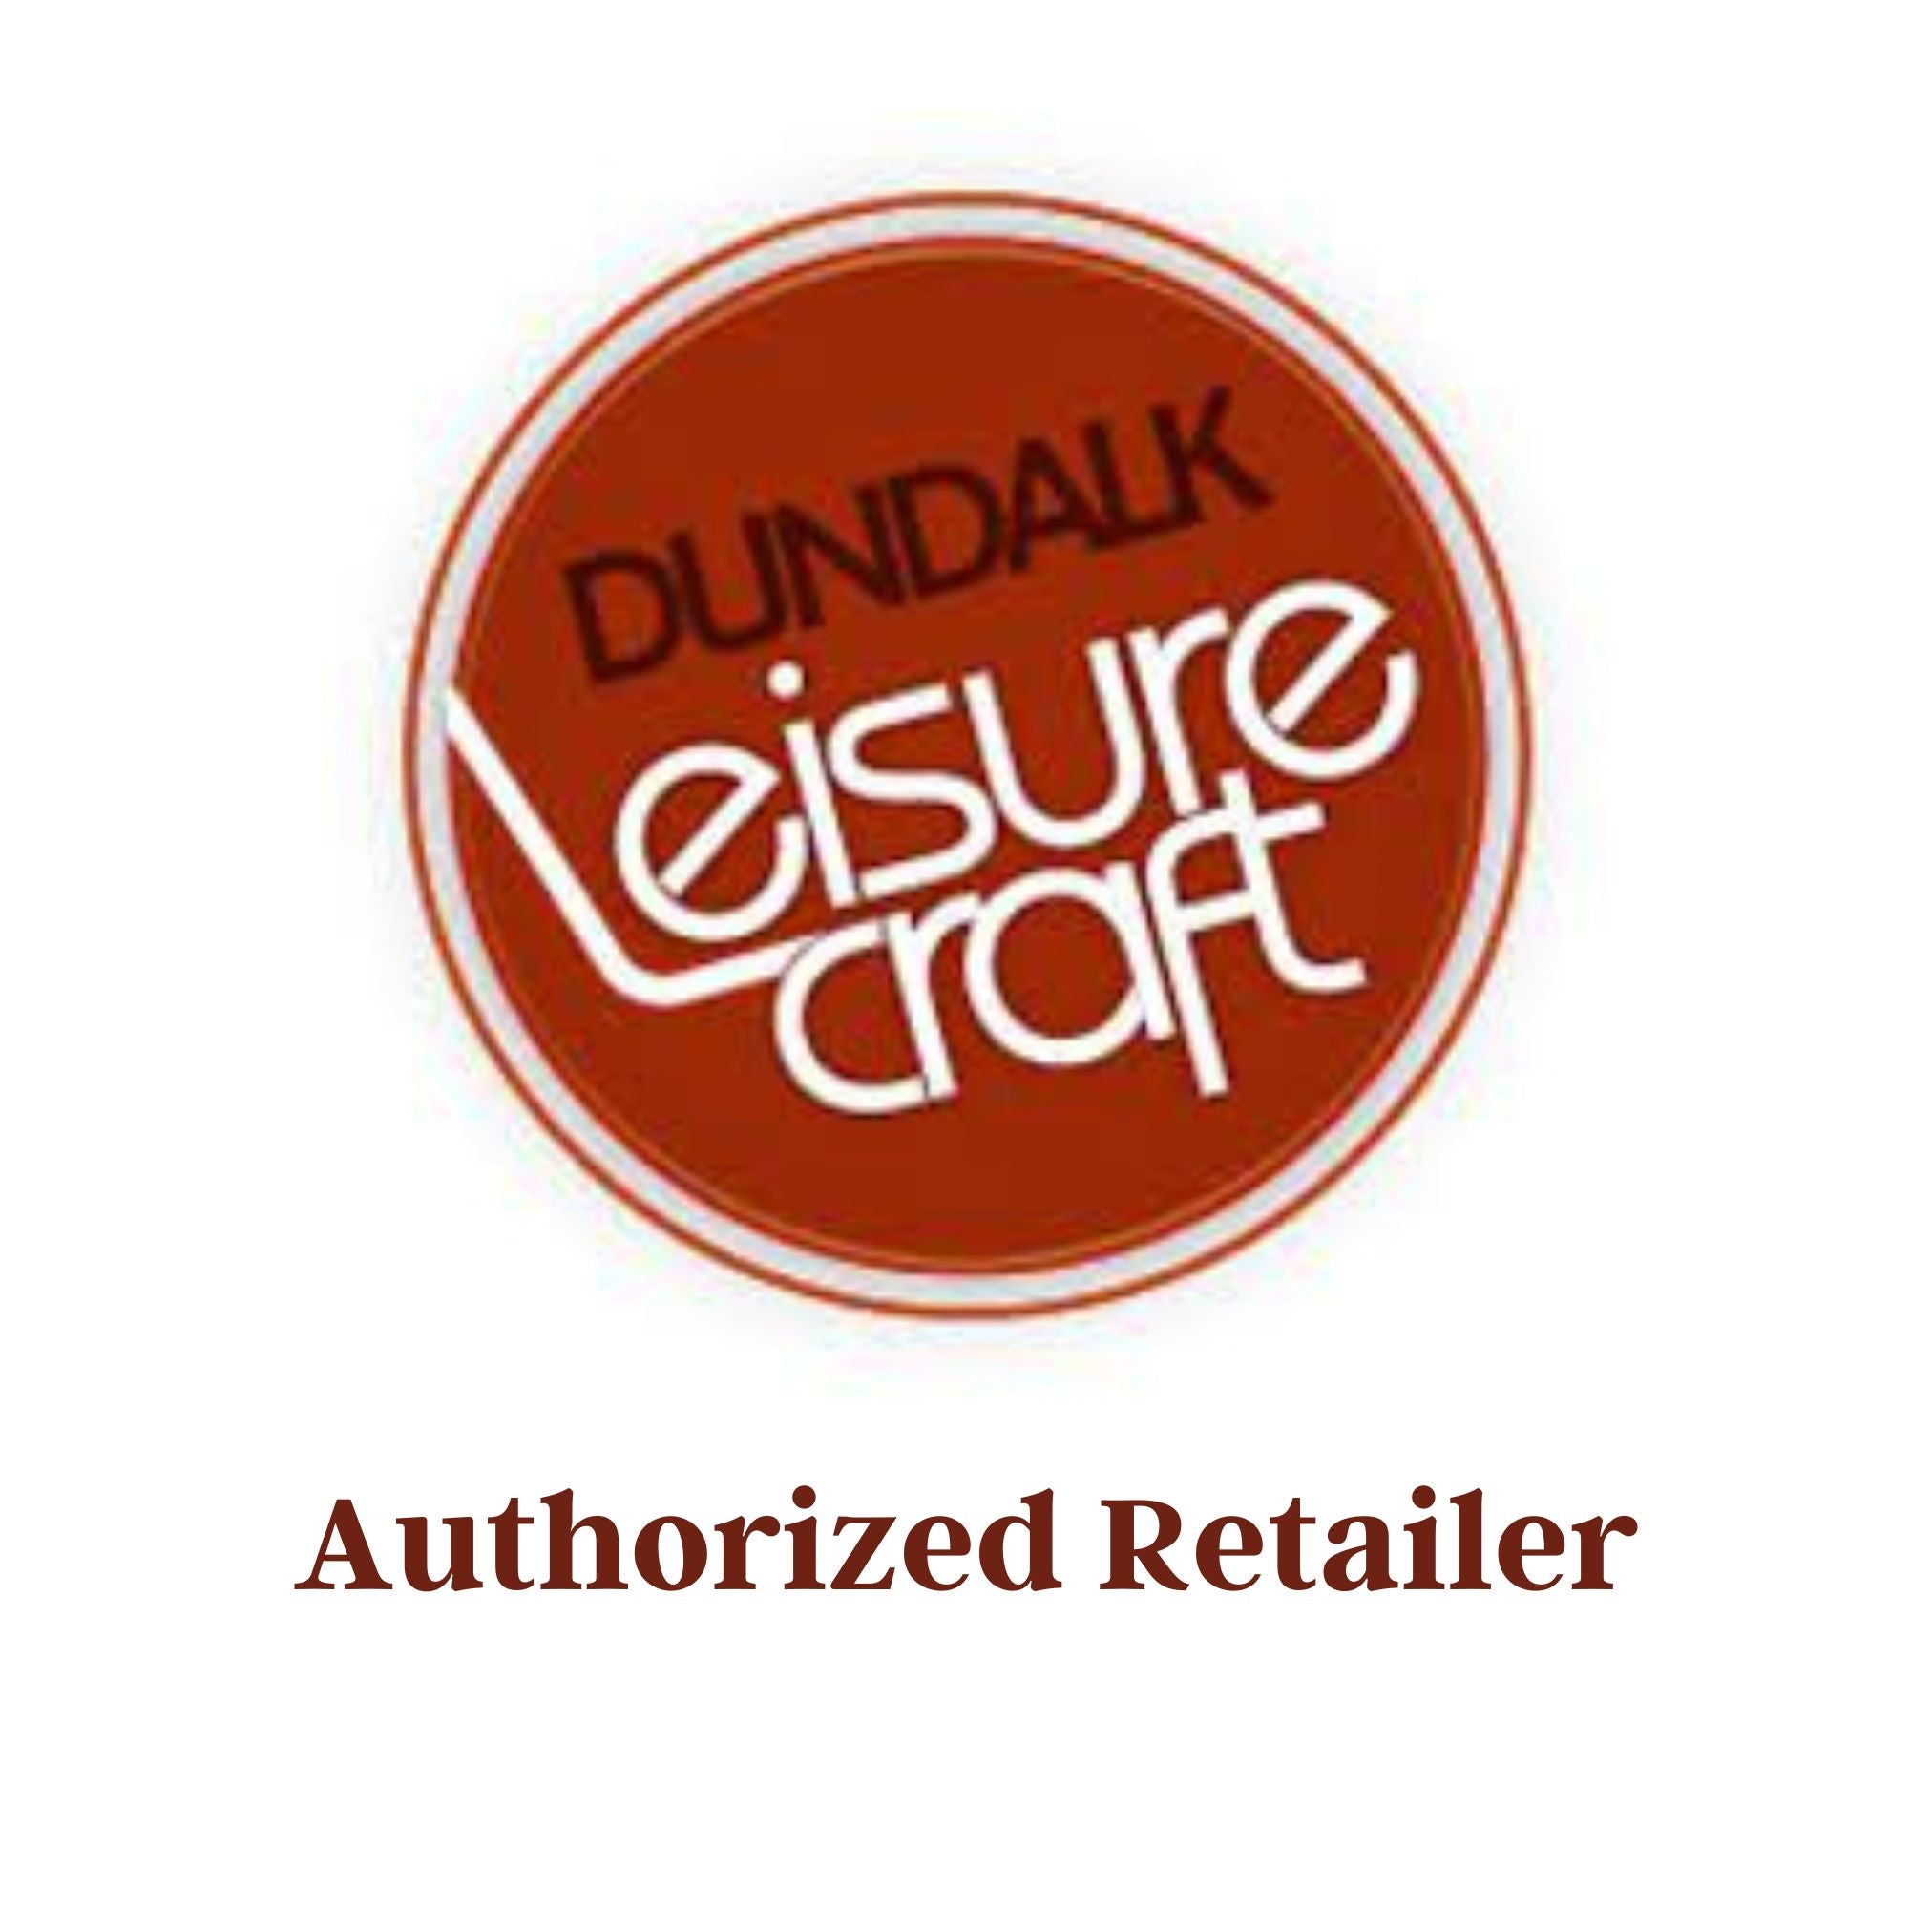 Dundalk LeisureCraft authorized retailer offering the Dundalk Leisurecraft The Baltic Cold Plunge Tub.